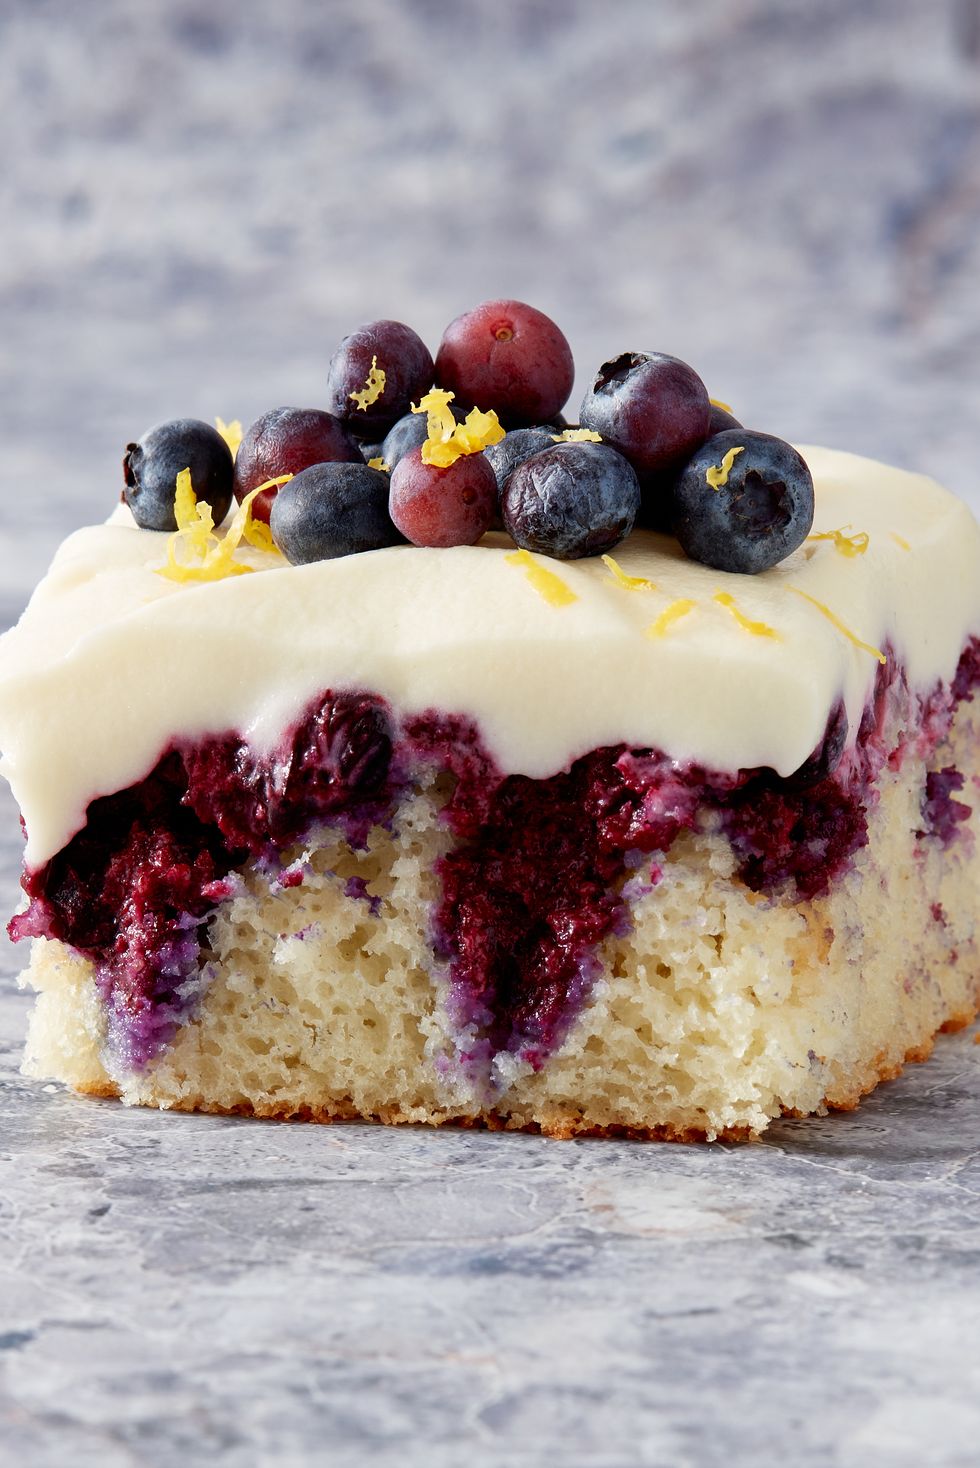 Lemon Blueberry Poke Cake: Το τέλειο γλυκό που θα φτιάχνεις άνοιξη-καλοκαίρι